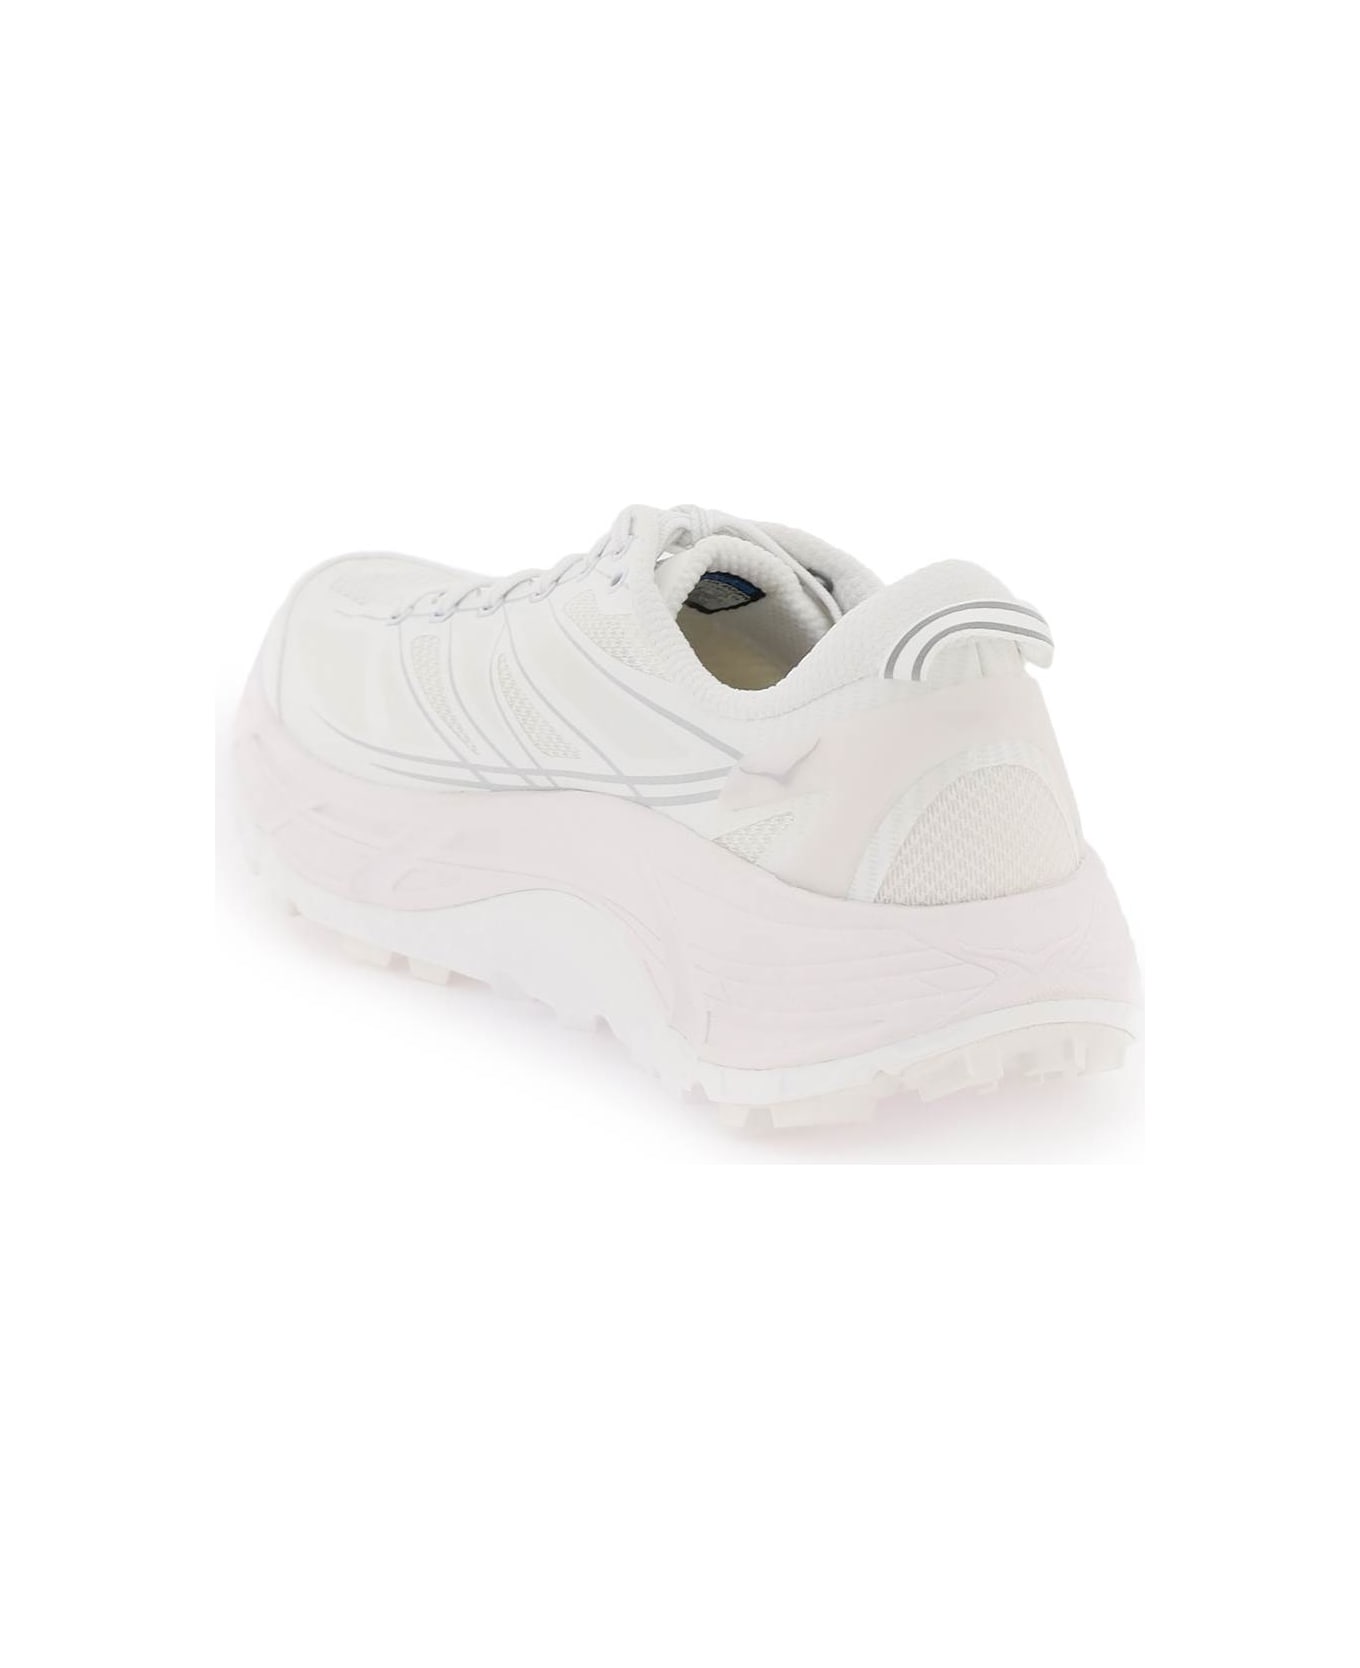 Hoka 'mafate Speed 2' Sneakers - Wlrc White / Lunar Rock